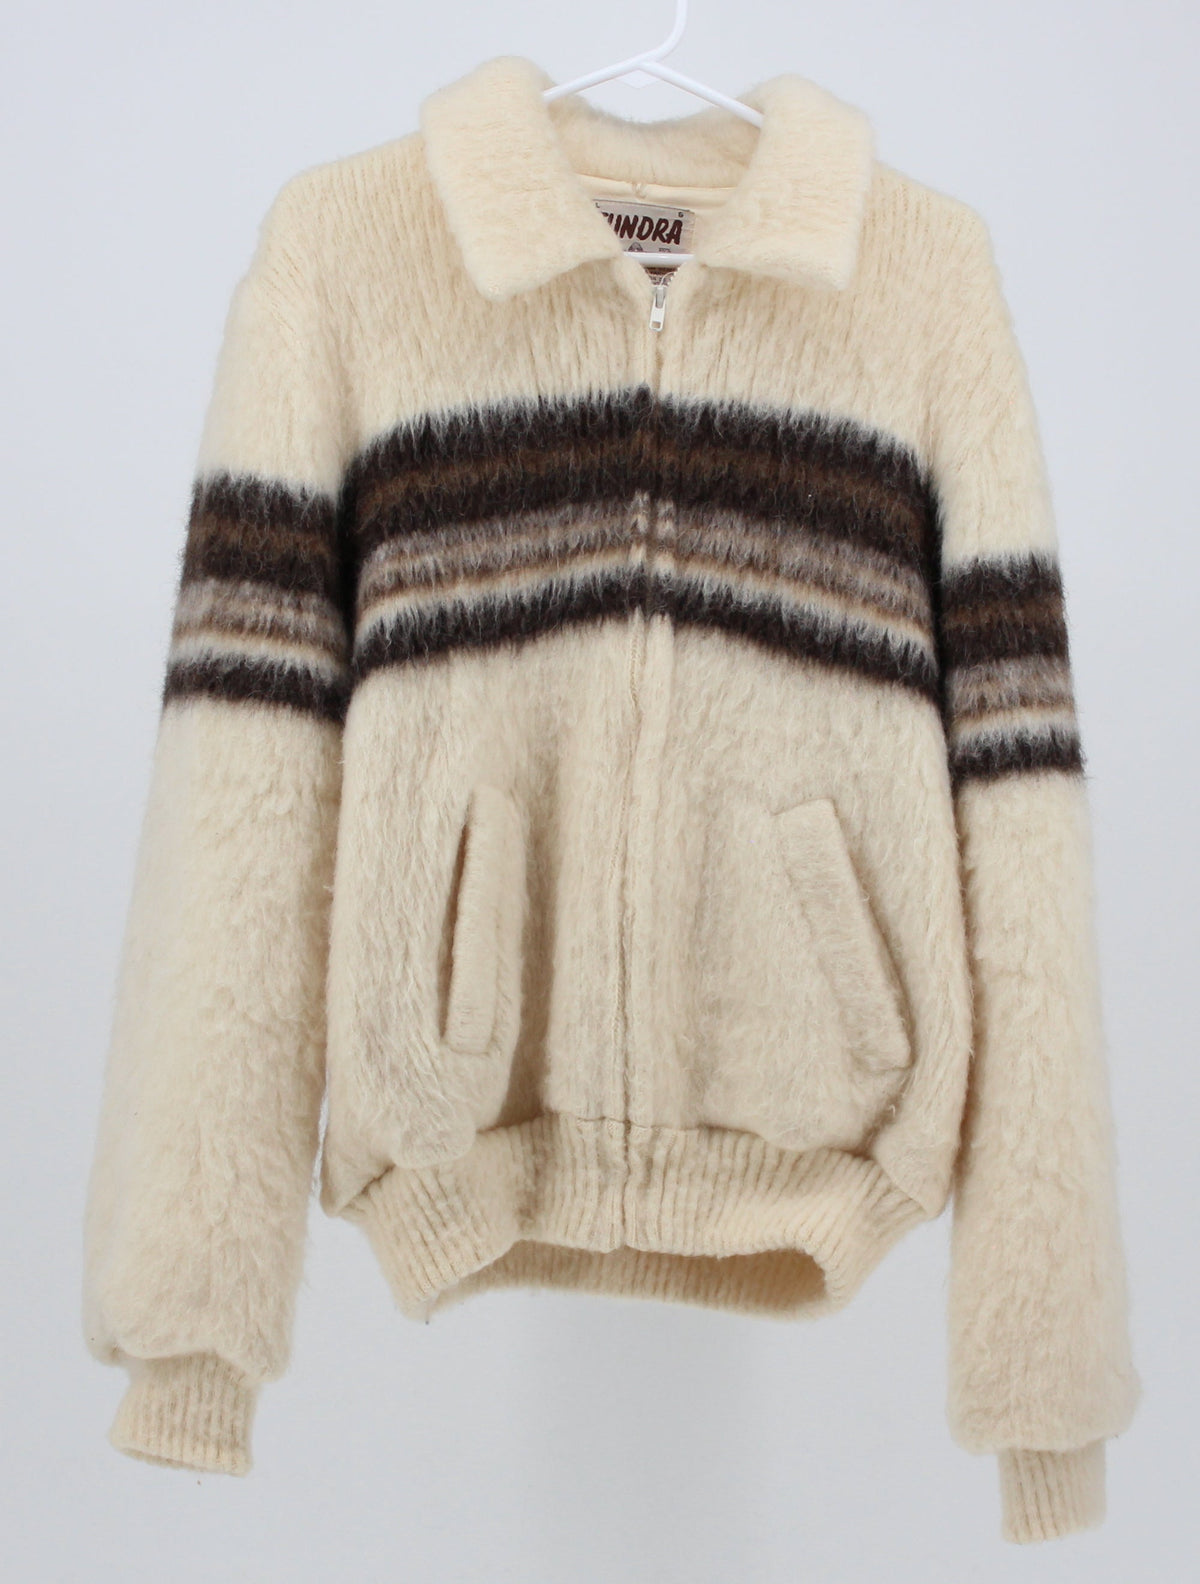 Tundra 100% Pure Virgin Wool Cream and Brown Mid-Zip Sweater